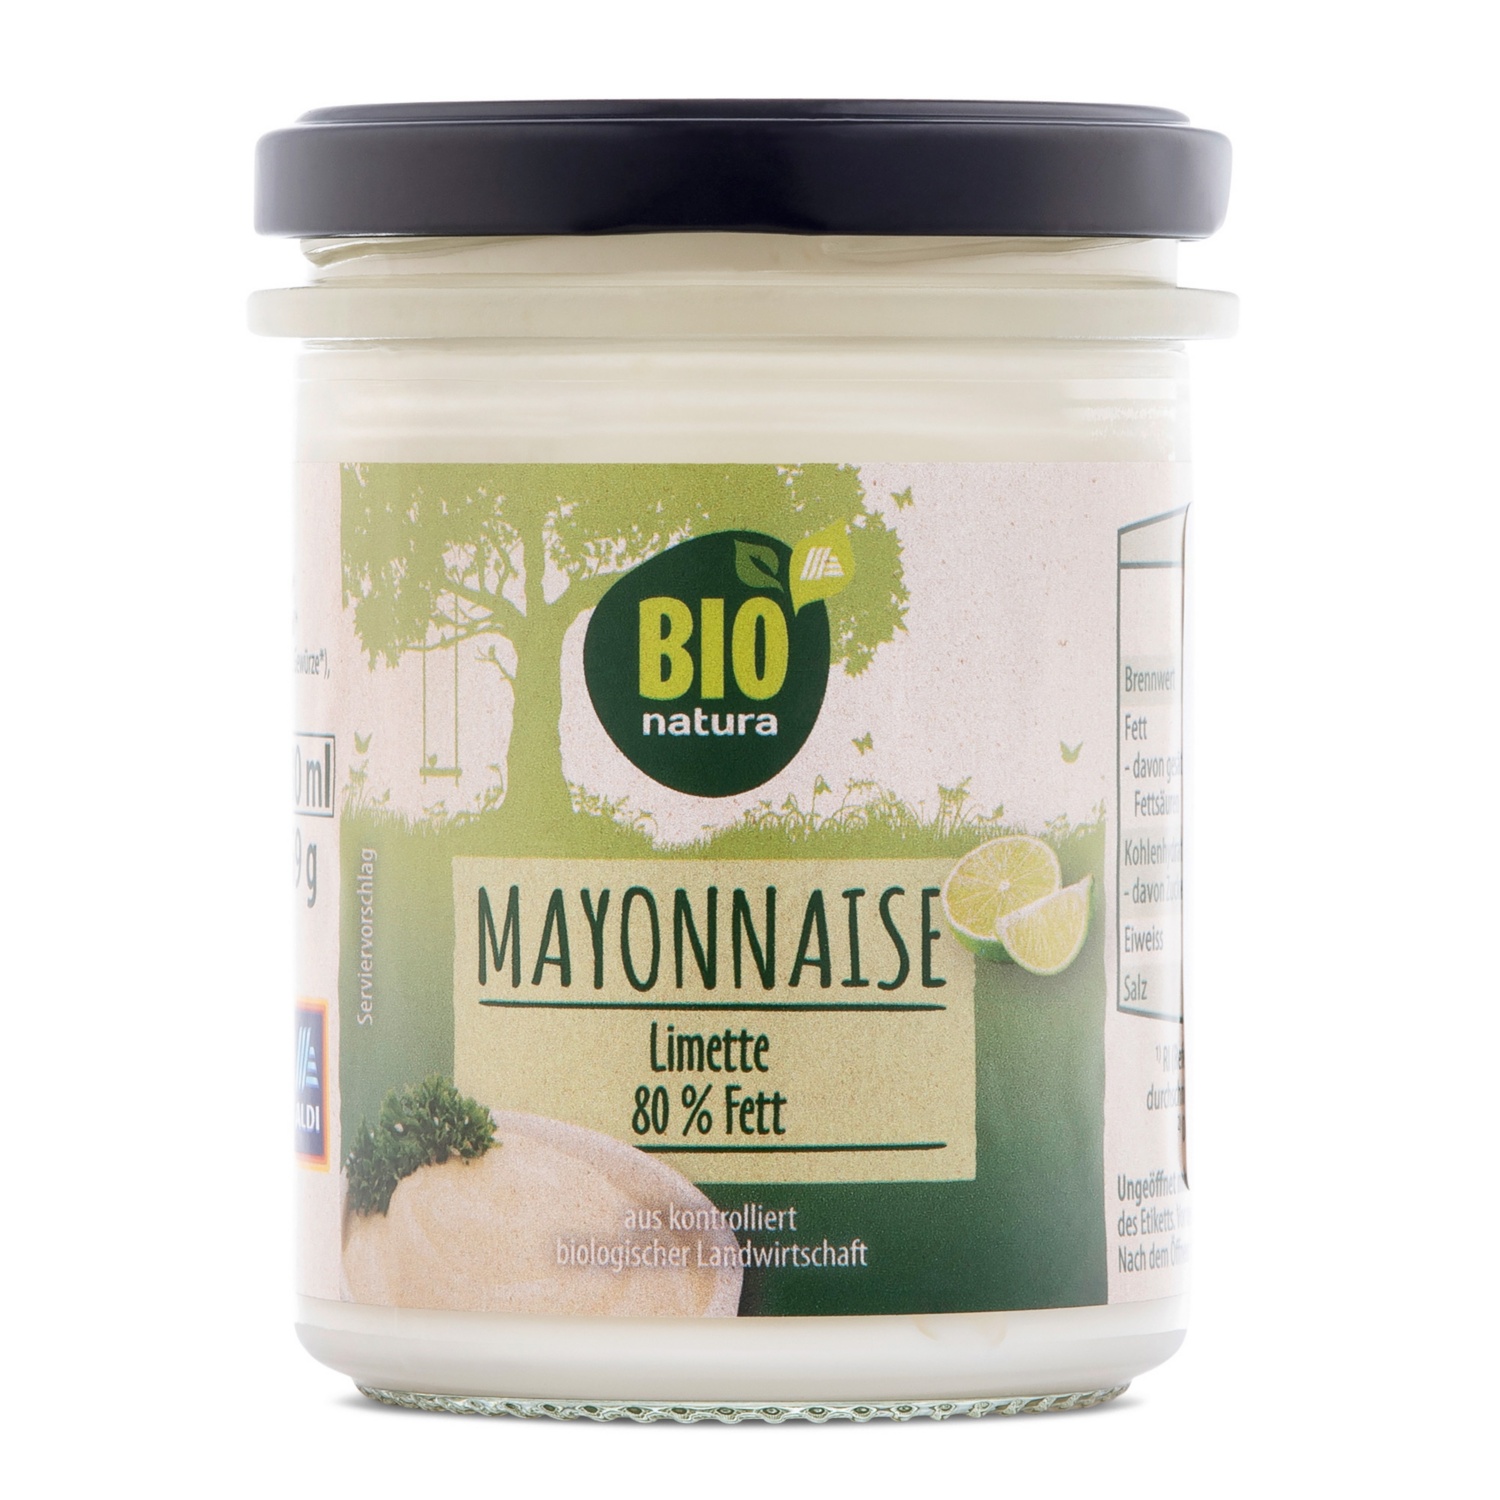 BIO NATURA BIO-Mayonnaise 80%, Limette